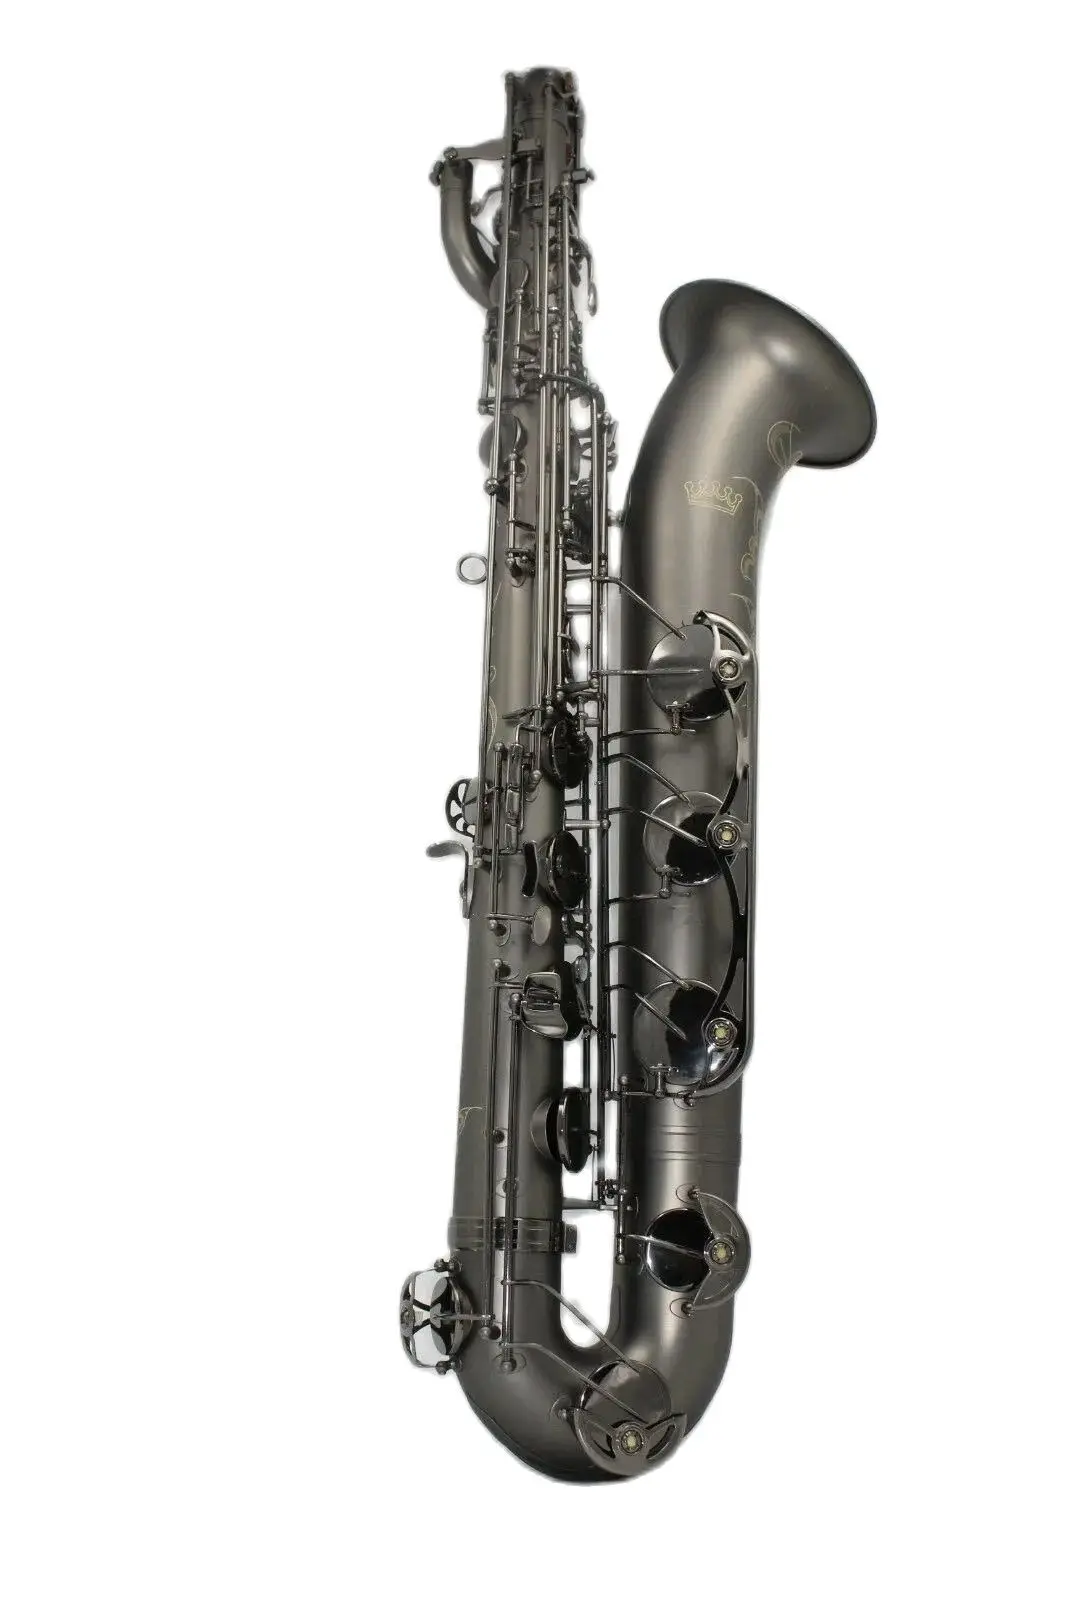 

High grade music Matt black Baritone Saxophone full body hand engraving